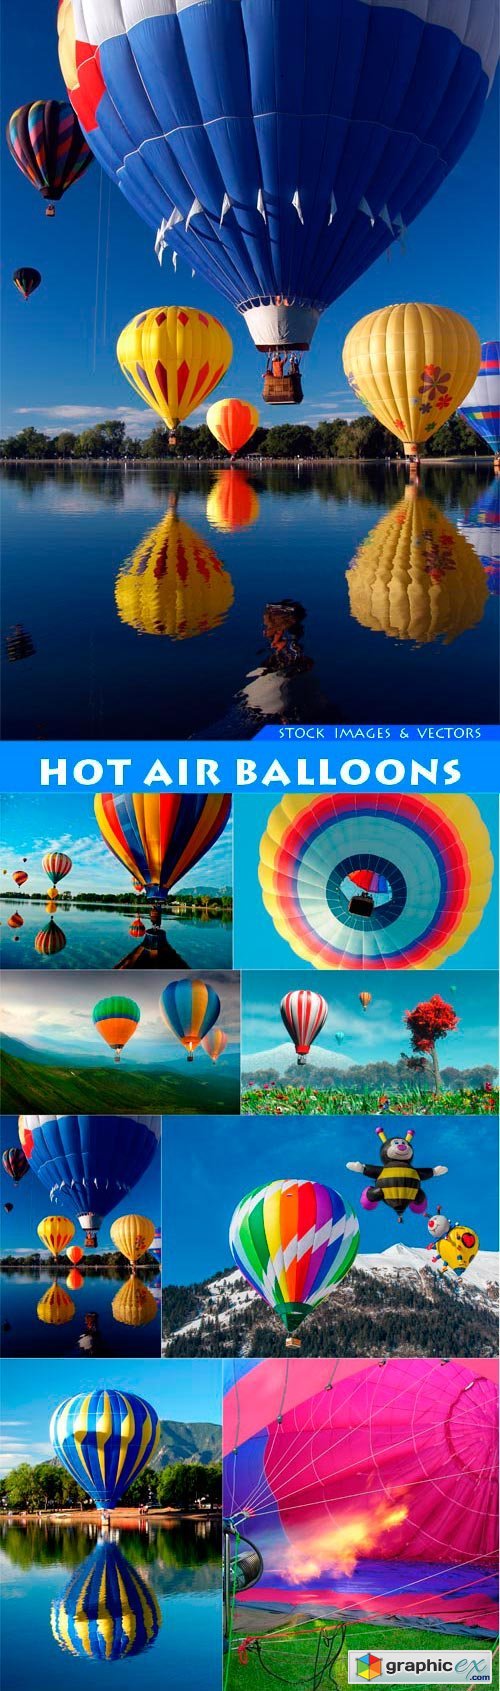 Hot Air Balloons 8X JPEG